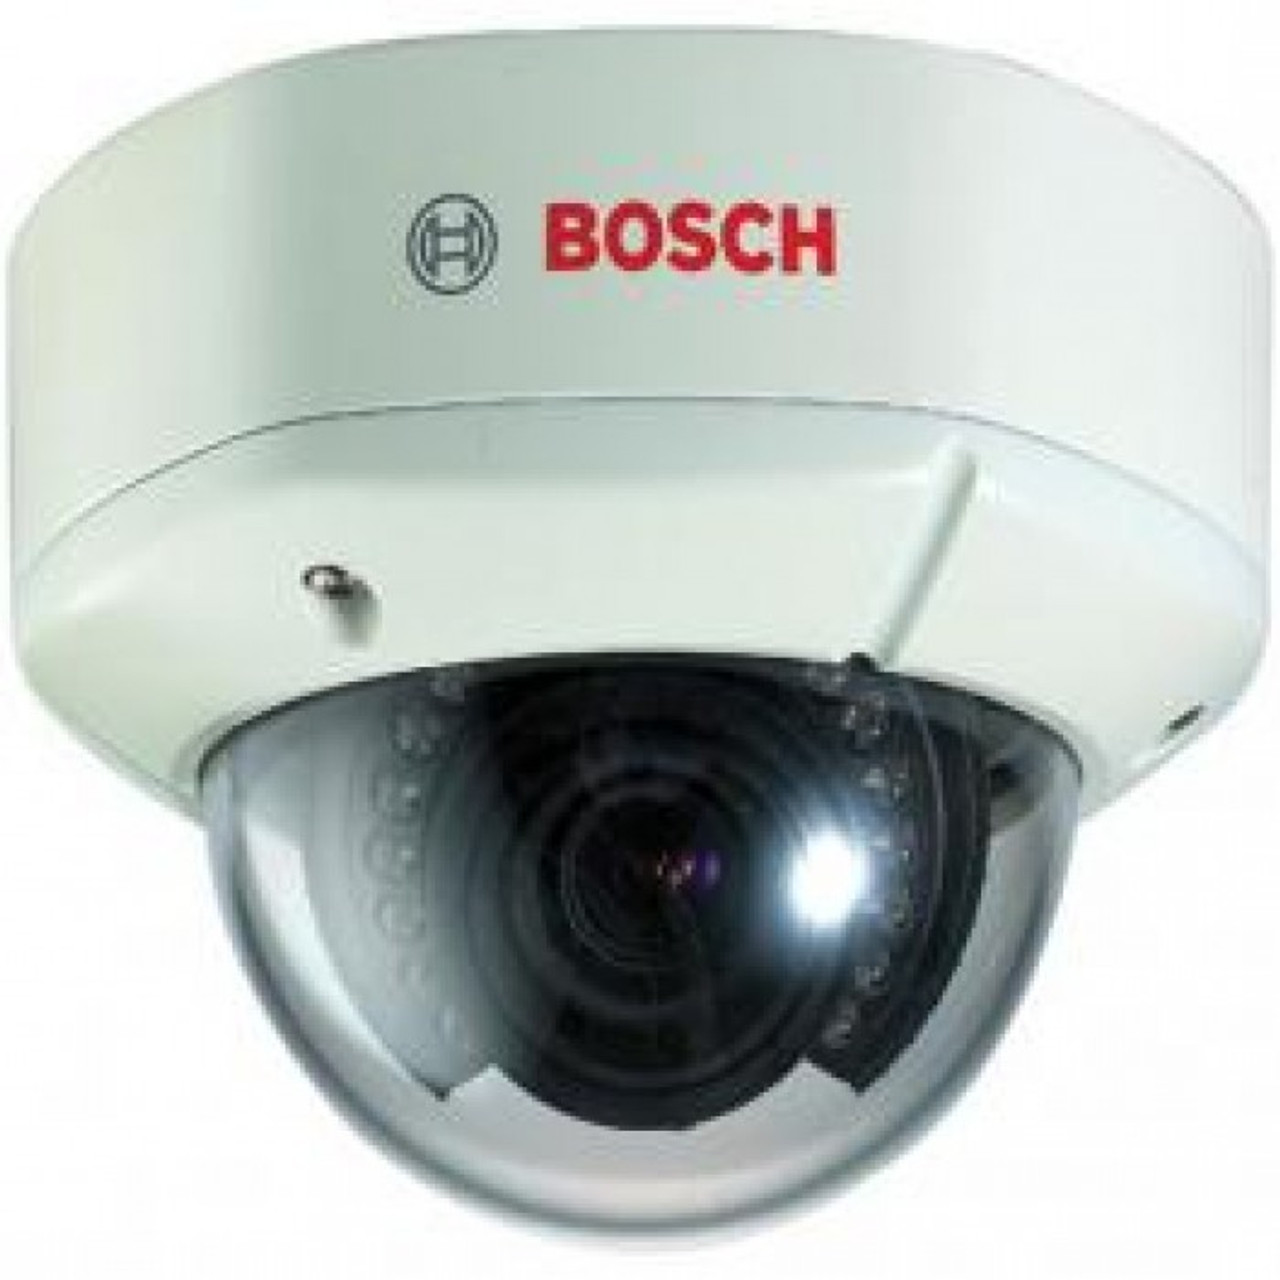 Bosch VDI-240V03-2H Outdoor Dome CCTV Camera